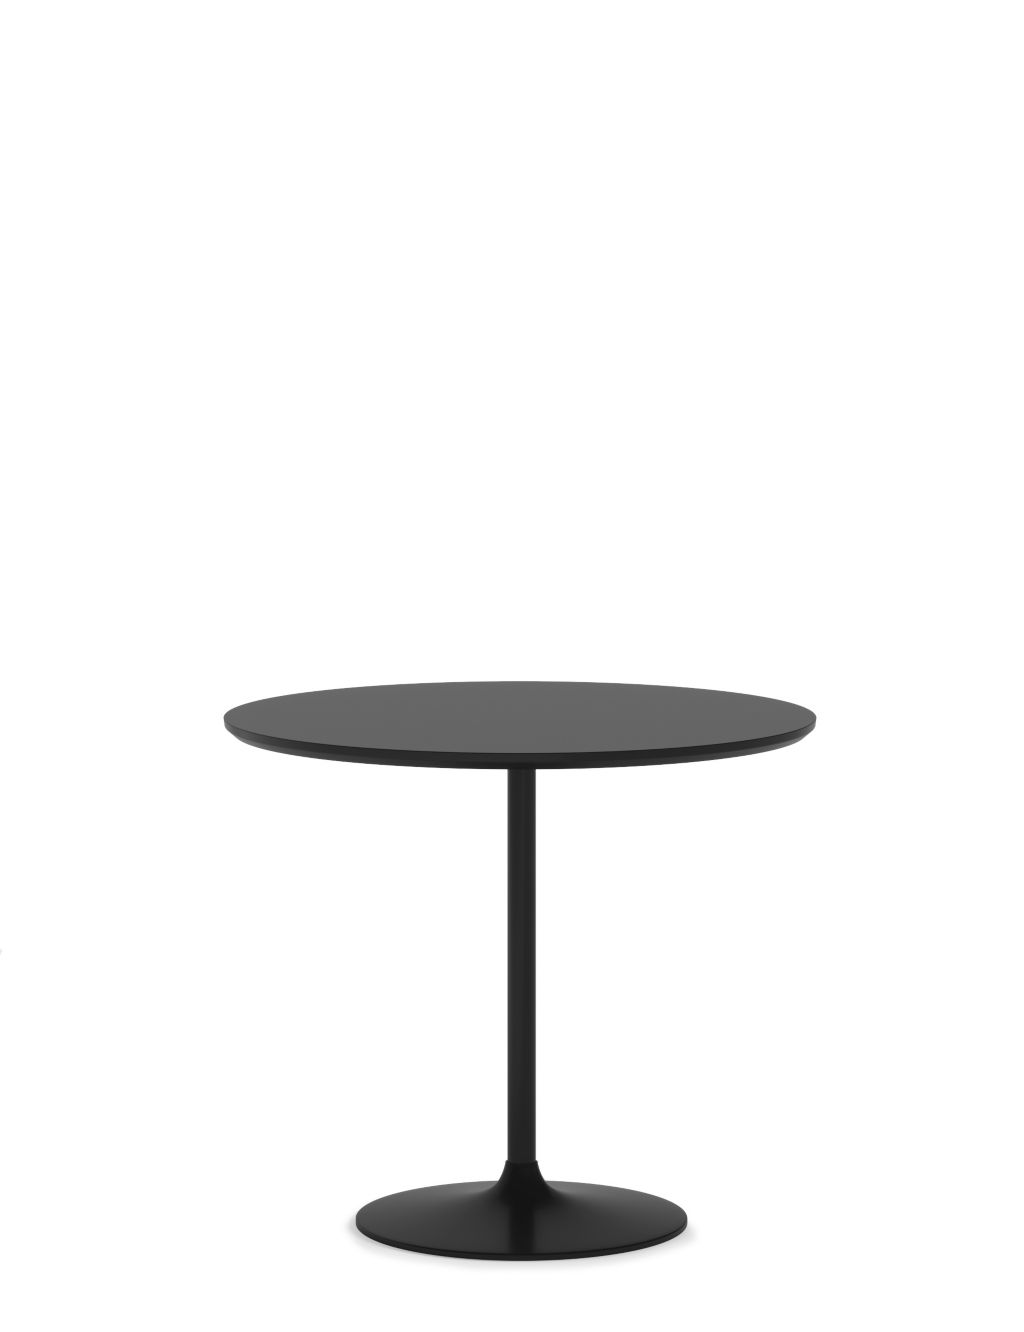 Finn Black 4 Seater Pedestal Dining Table image 2